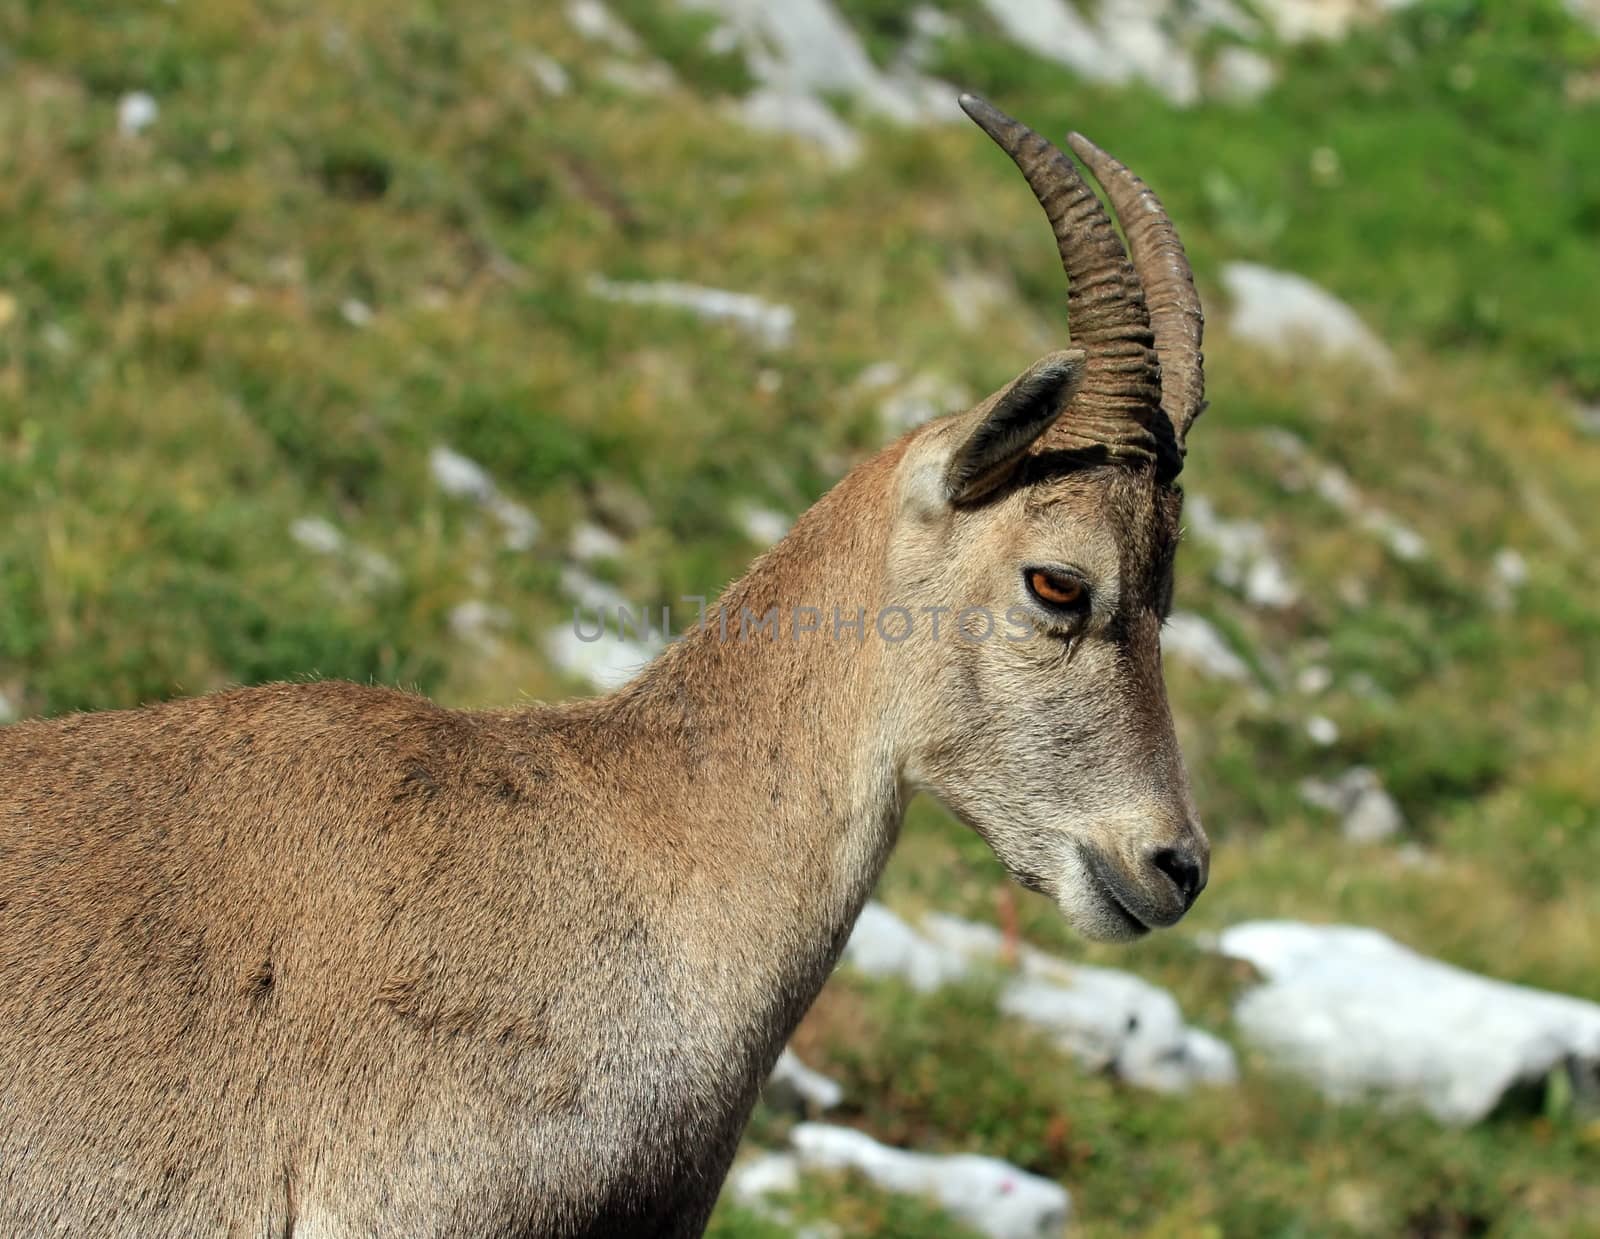 Wild alpine ibex - steinbock portrait by Elenaphotos21